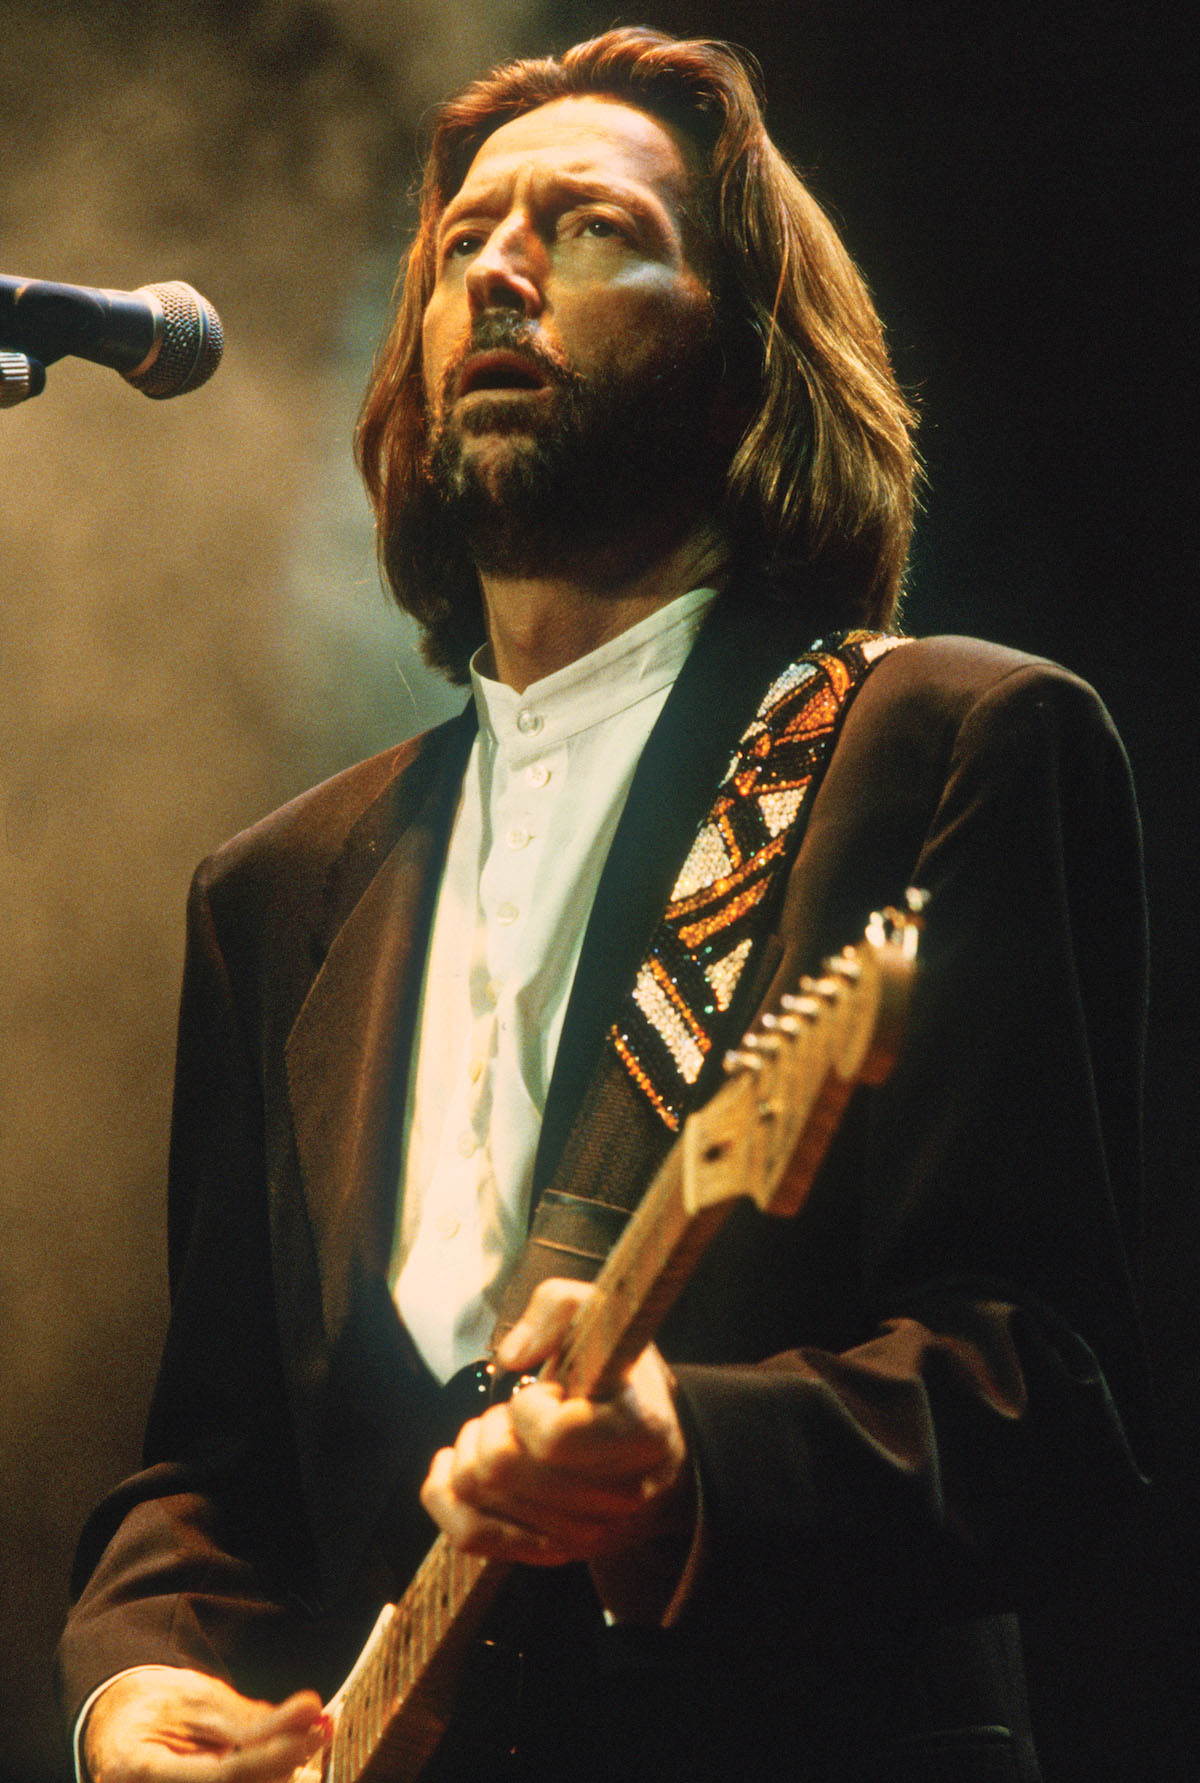 Eric Clapton[70] 04. Pretending 